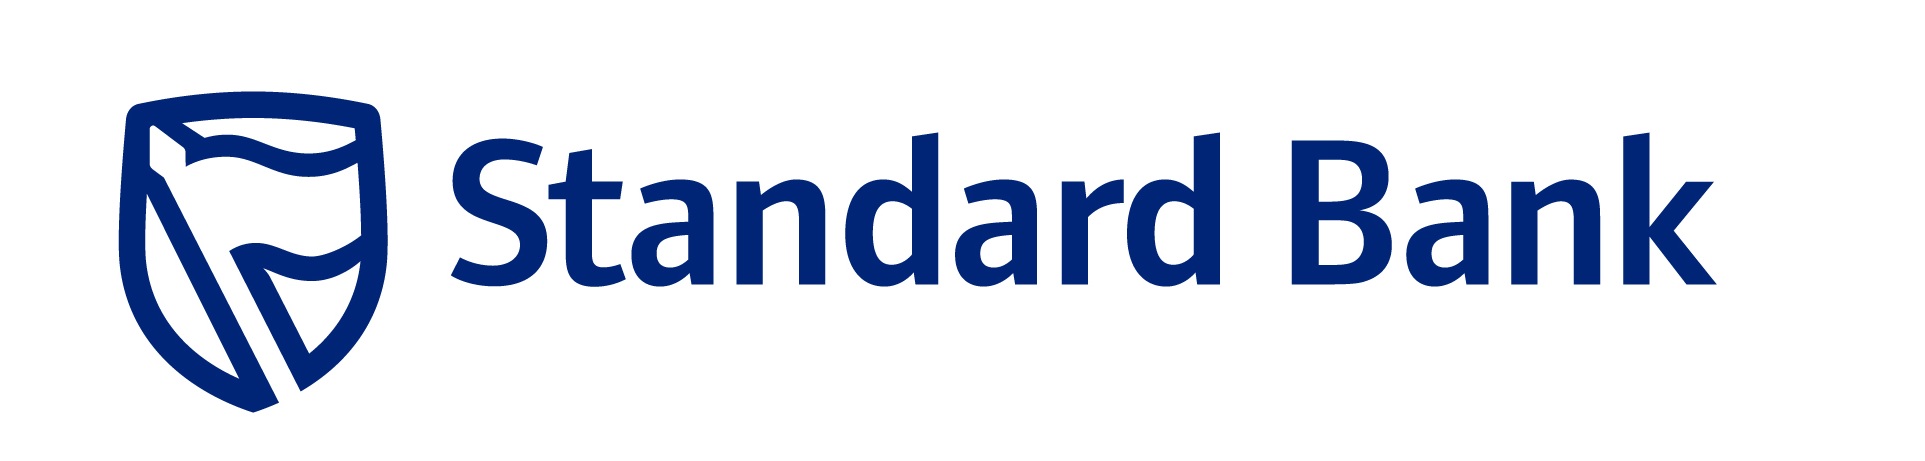 STANDARD BANK OF SOUTH AFRICA Brand Logo